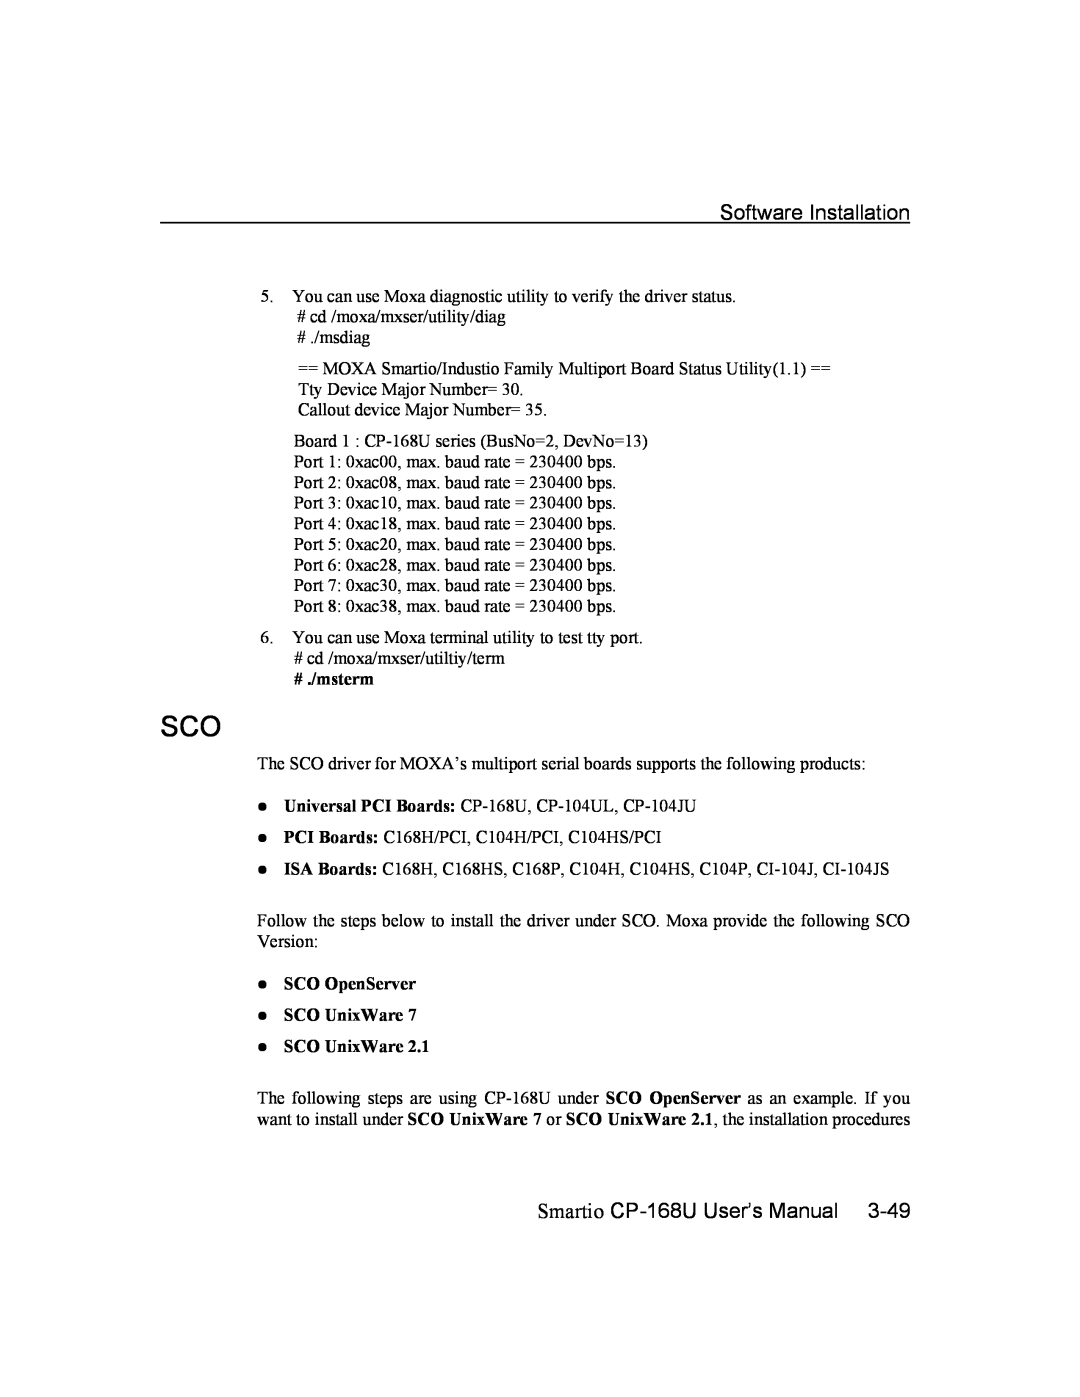 Moxa Technologies user manual Software Installation, Smartio CP-168U User’s Manual, # ./msterm 